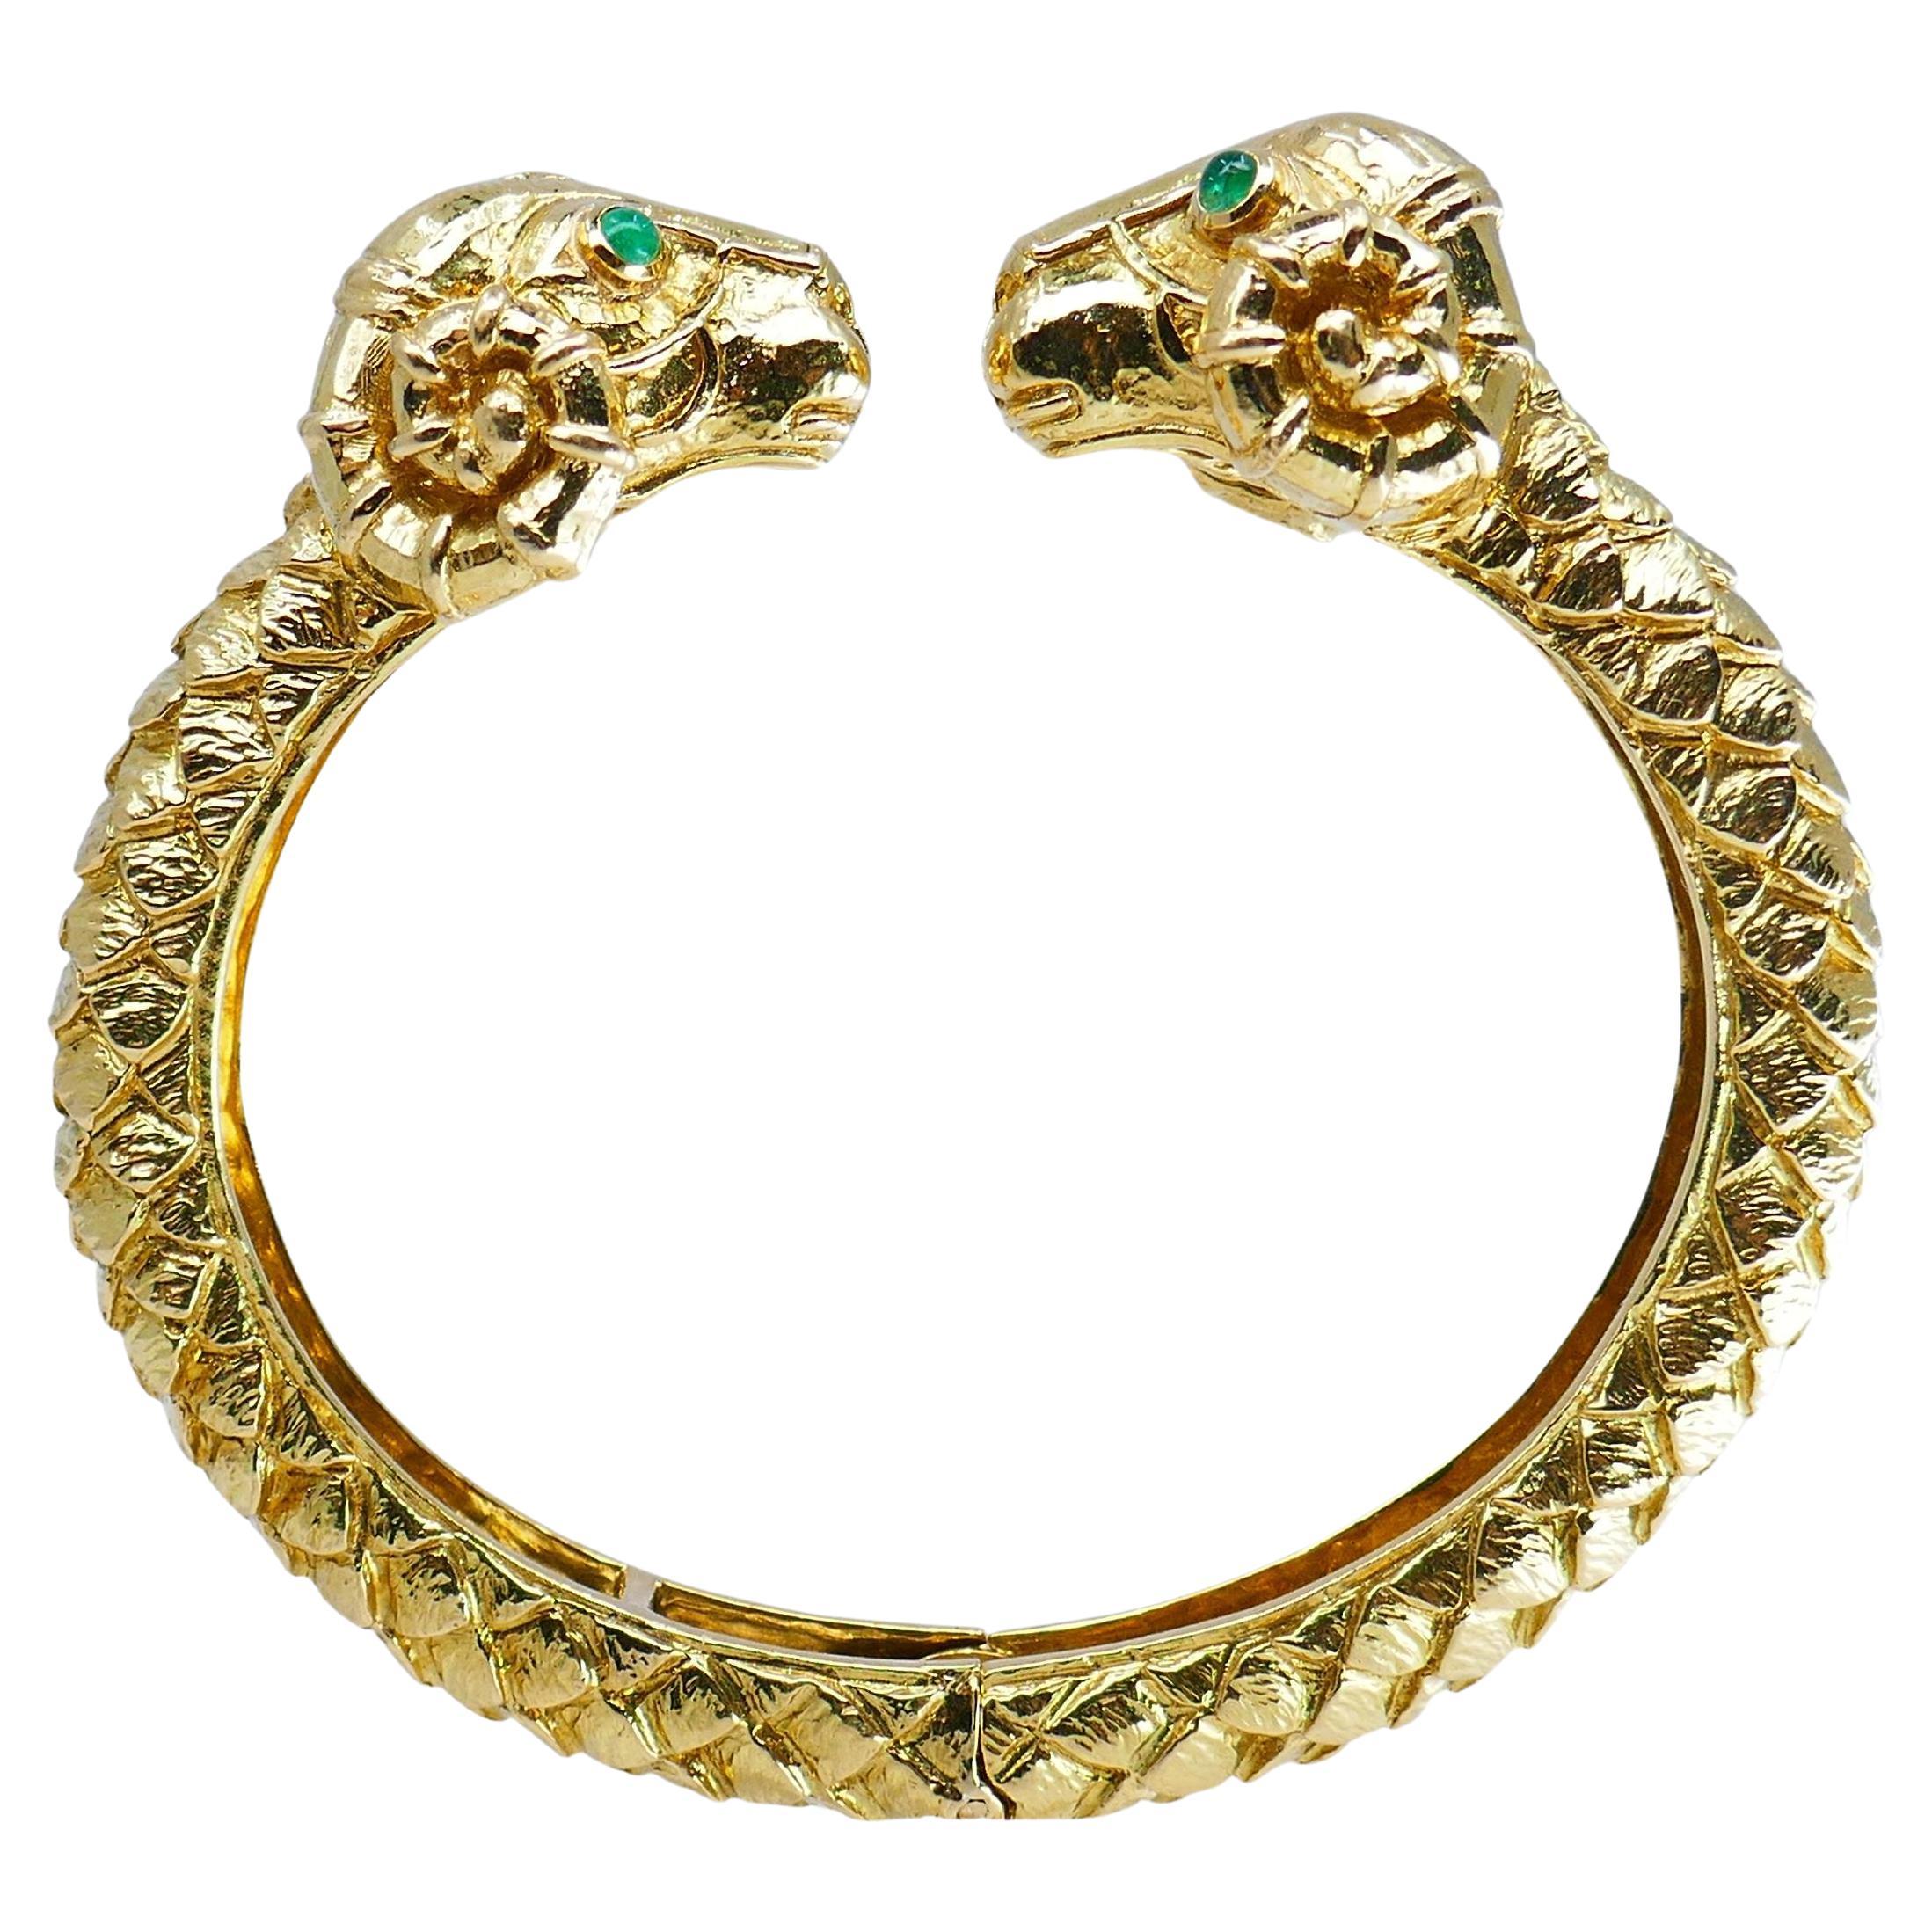 Ram Aries-Armband von David Webb, Gold mit Smaragd